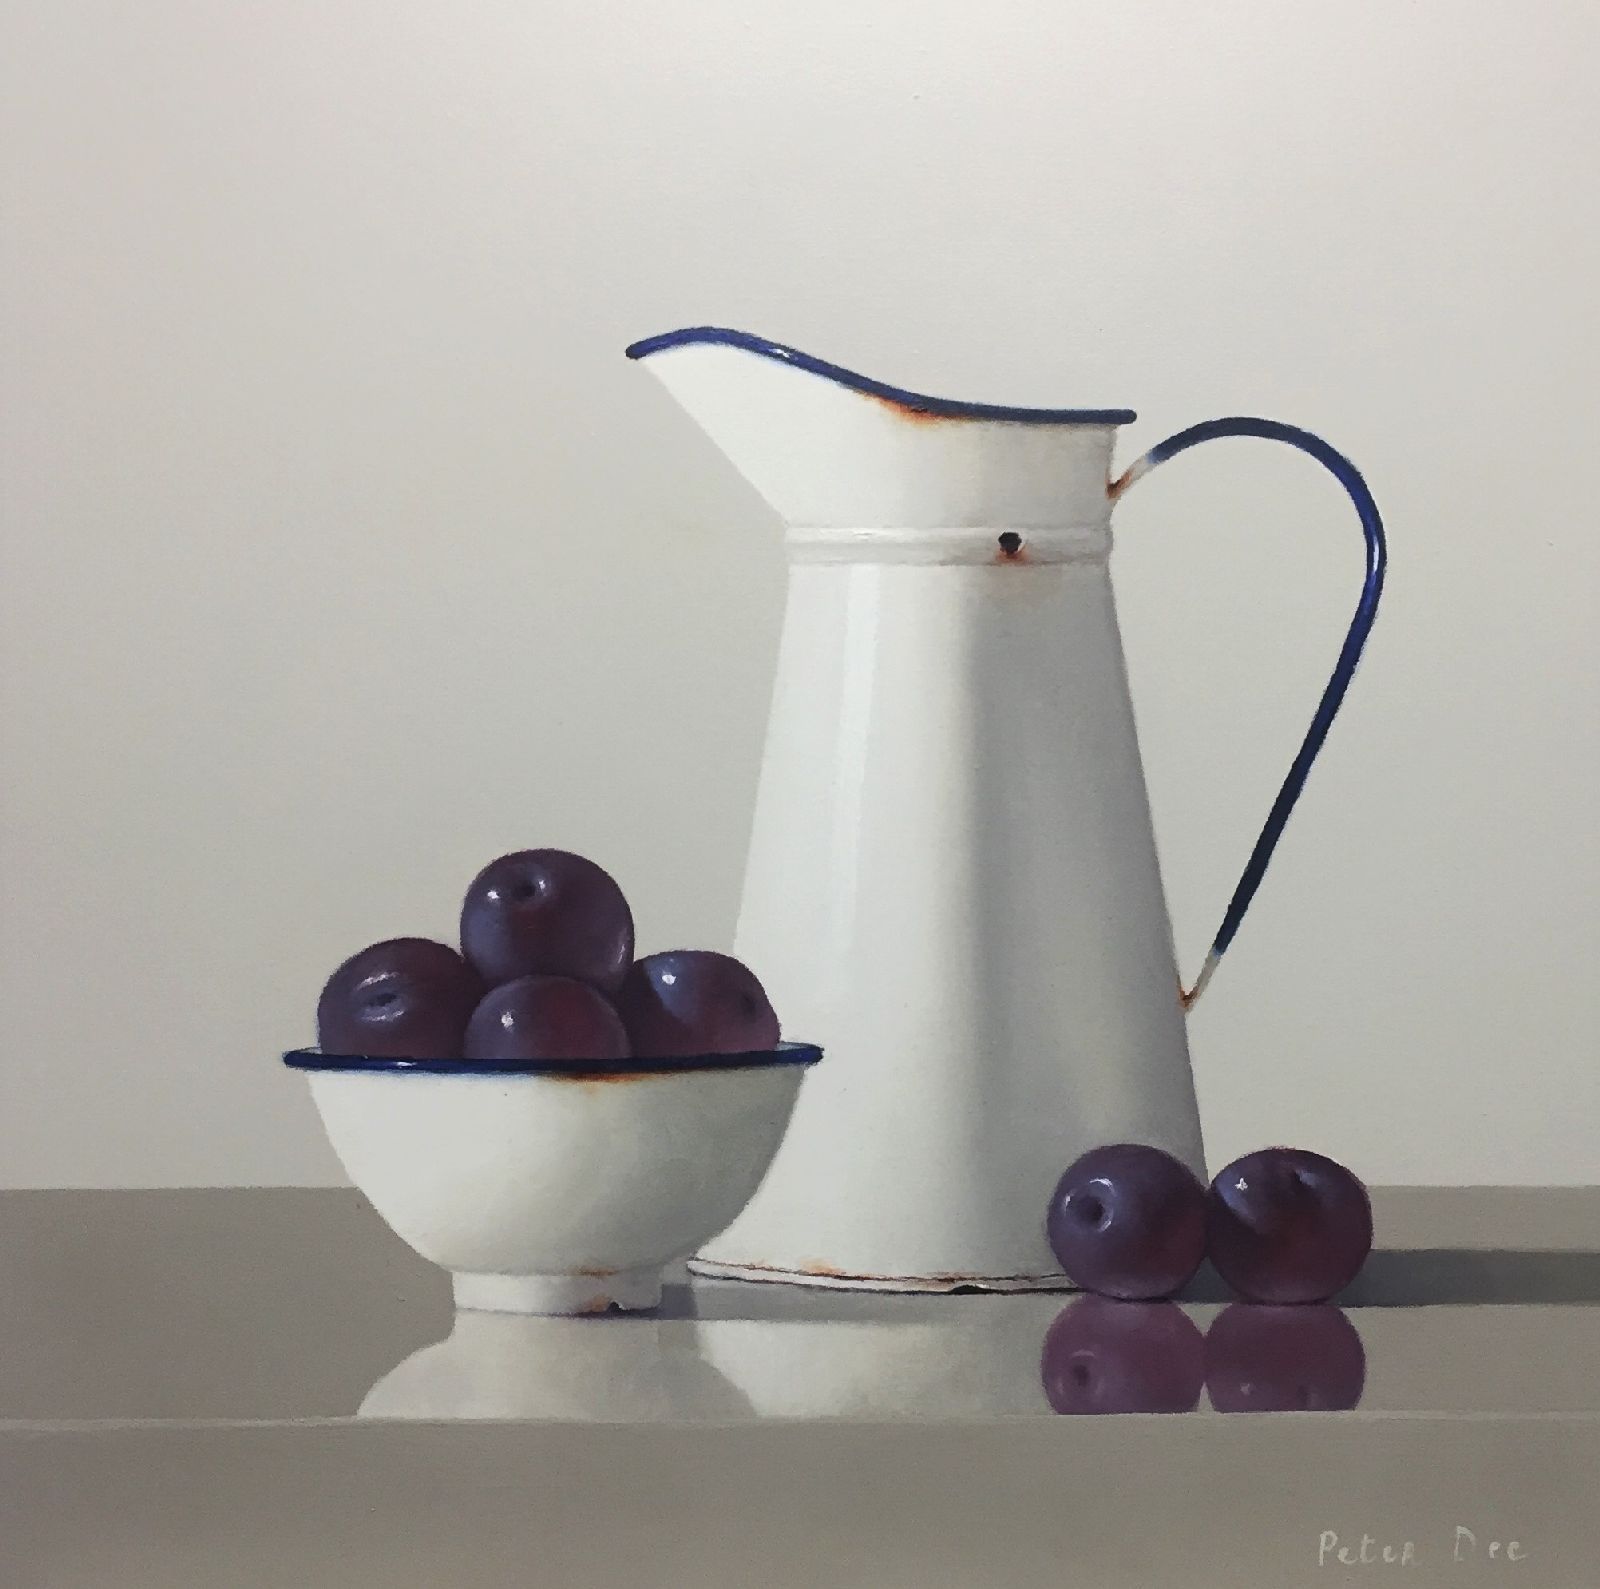 Vintage Enamelware with plums by Peter Dee